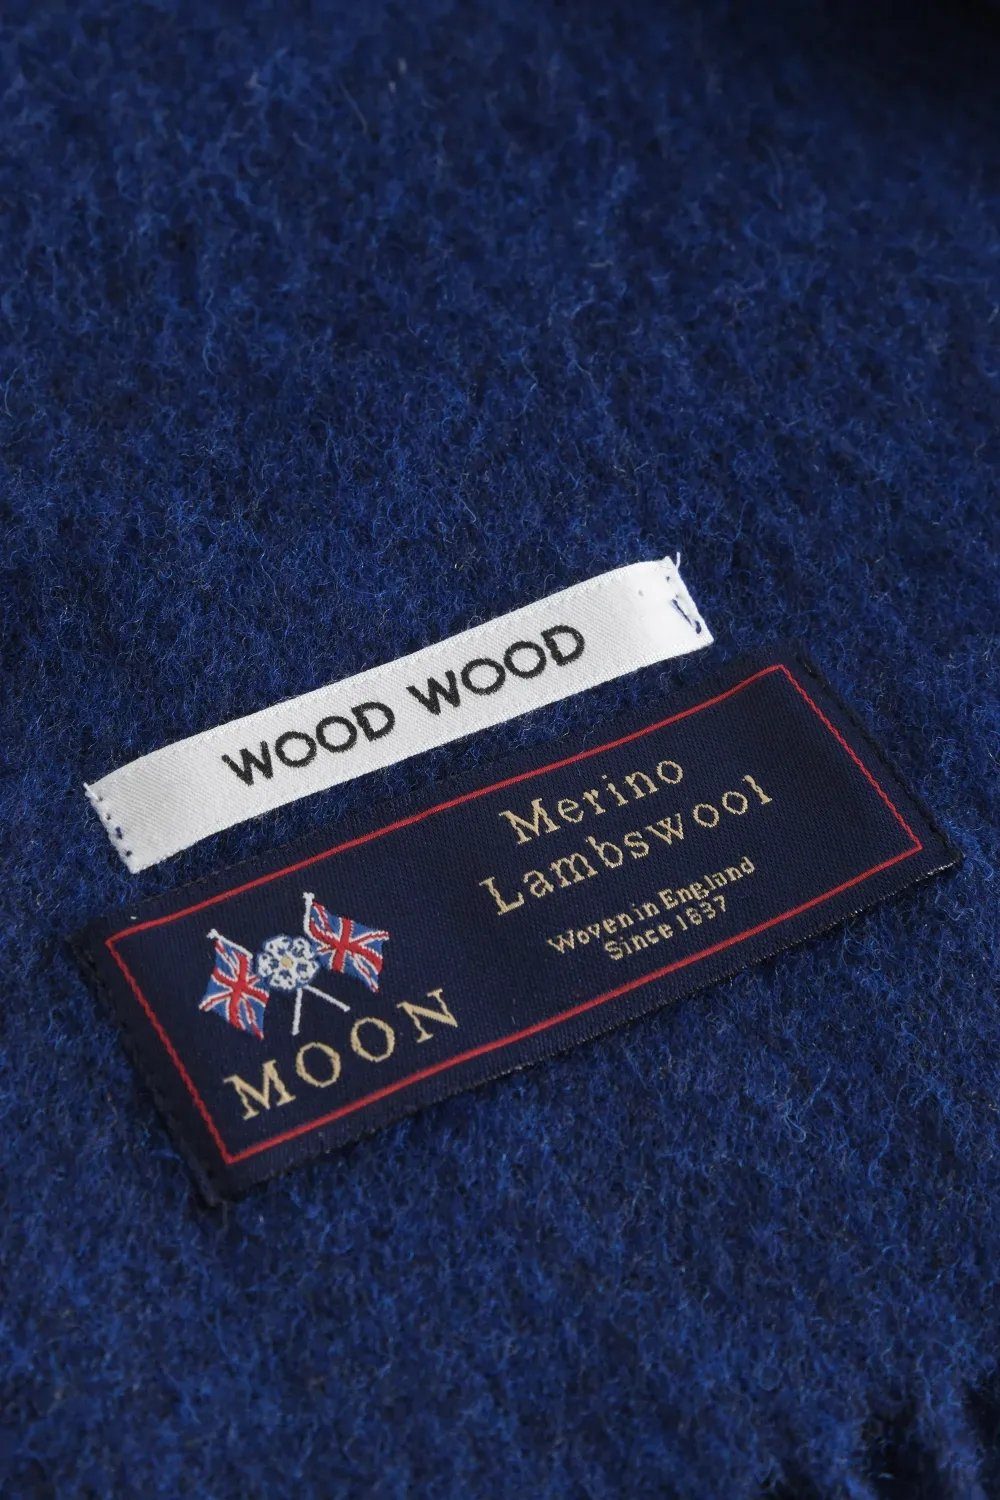 Solid Wollschal Karlo WOOD WOOD Wood Wood Scarf